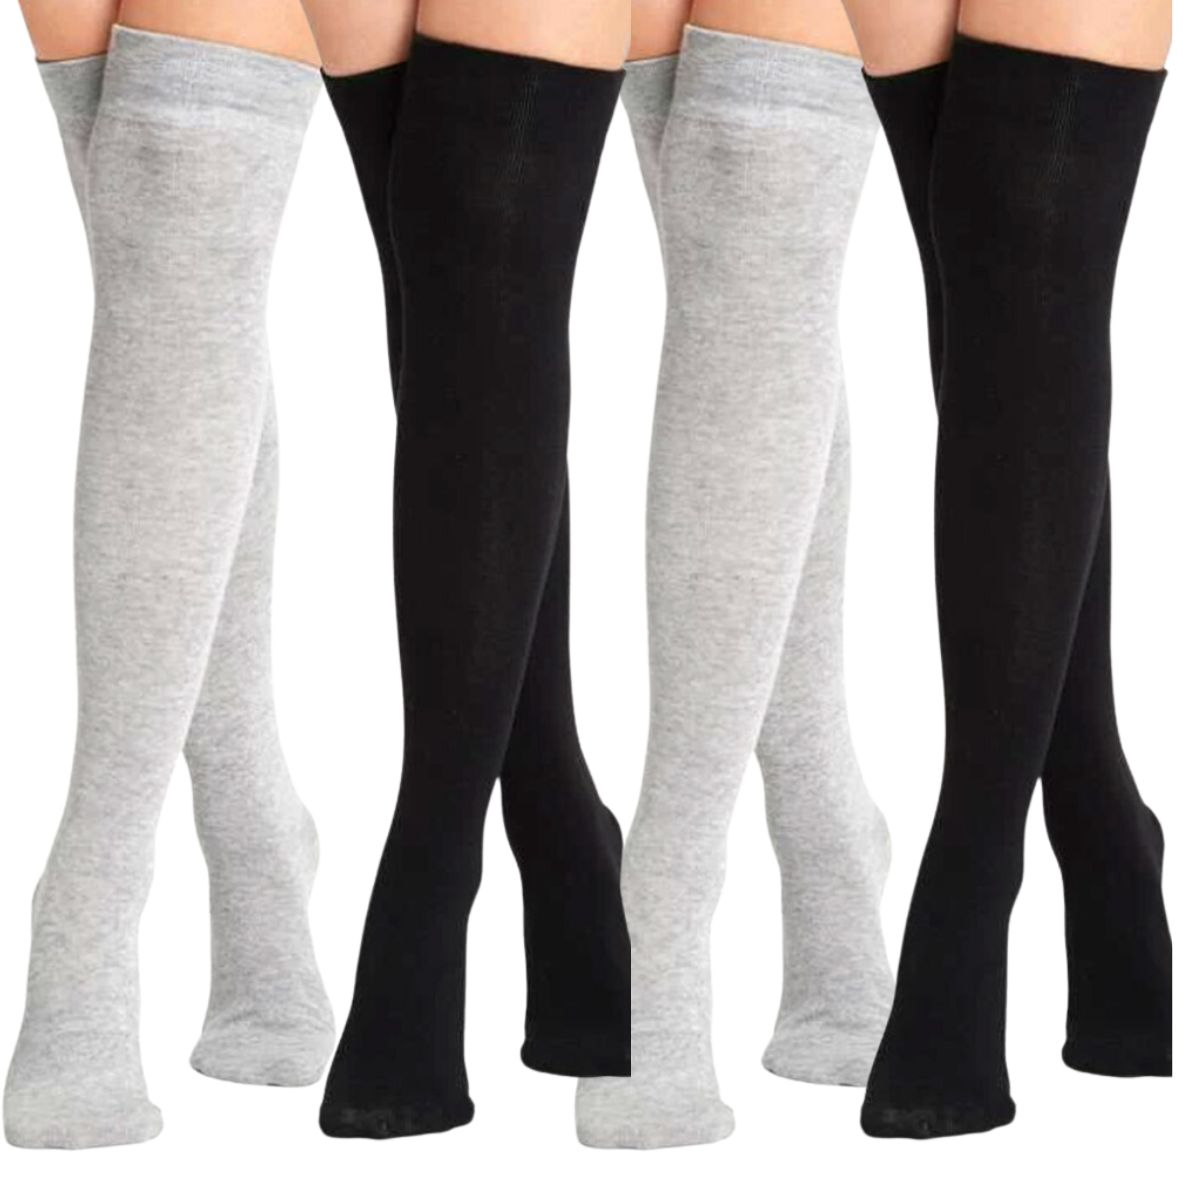 calcetas extralargas termicas para mujer (12 pares)